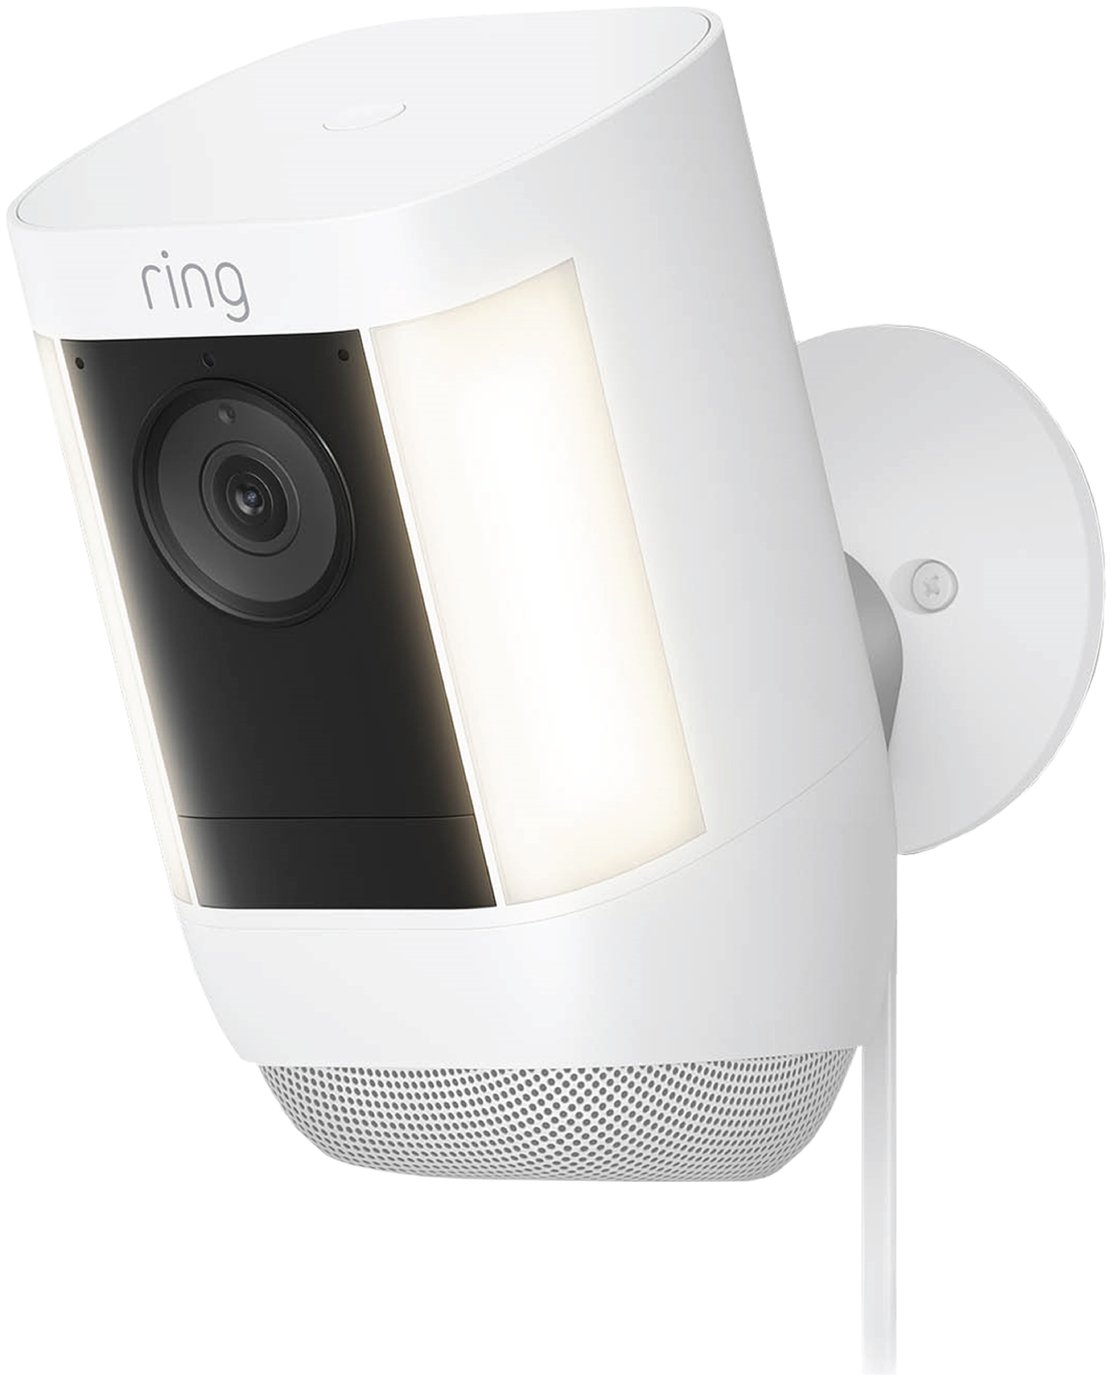 Ring Spotlight Cam Pro Plug In Security Camera- White